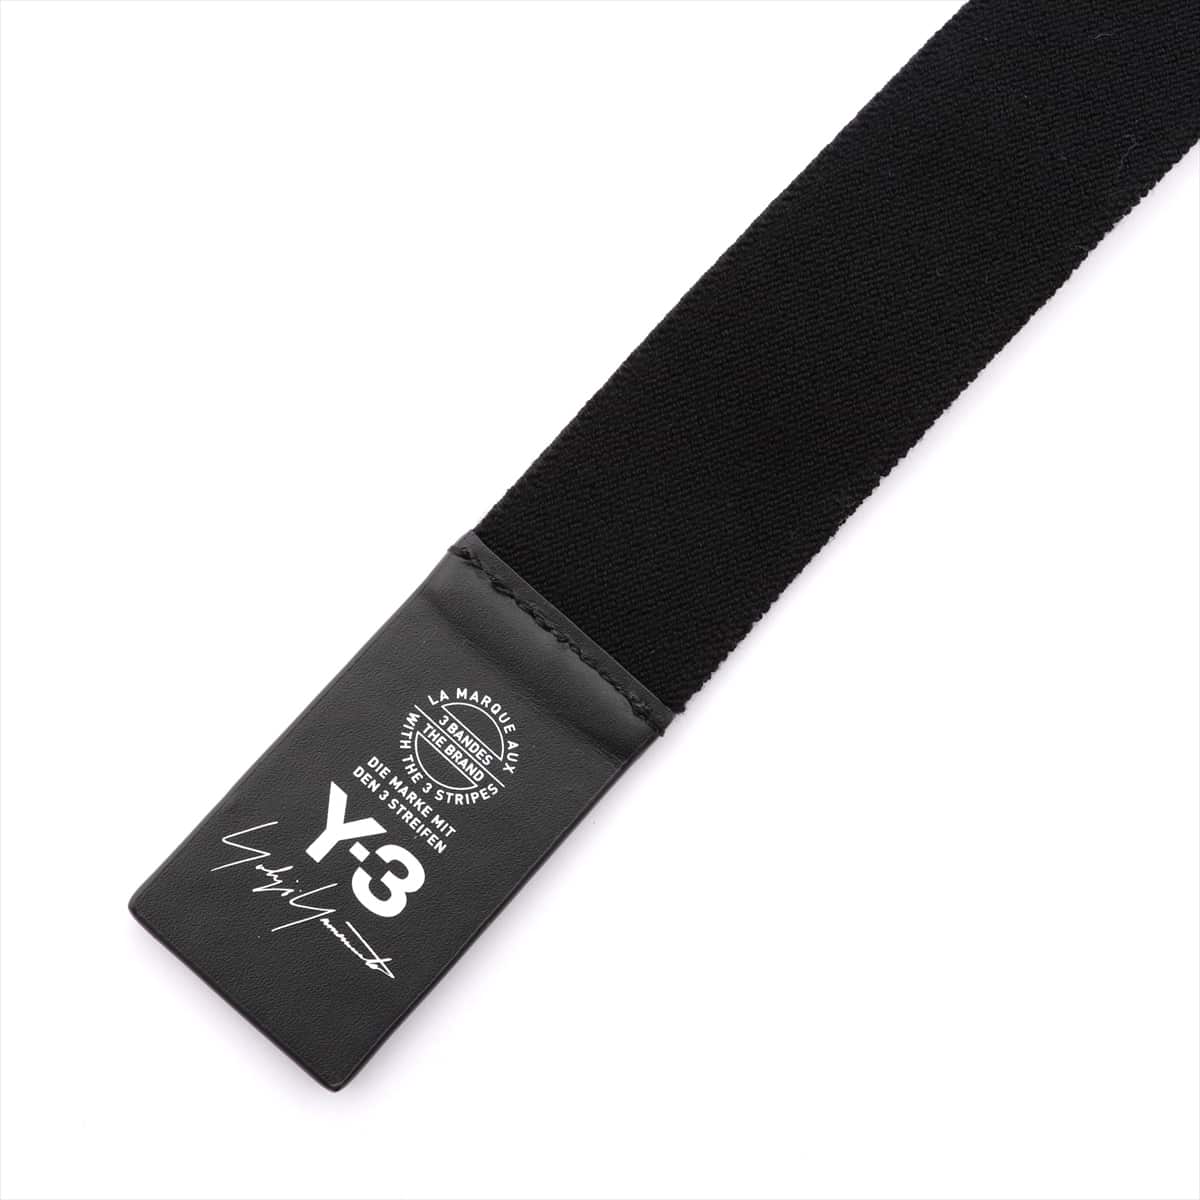 Y-3 Belt Nylon & leather Black Comes with storage bag